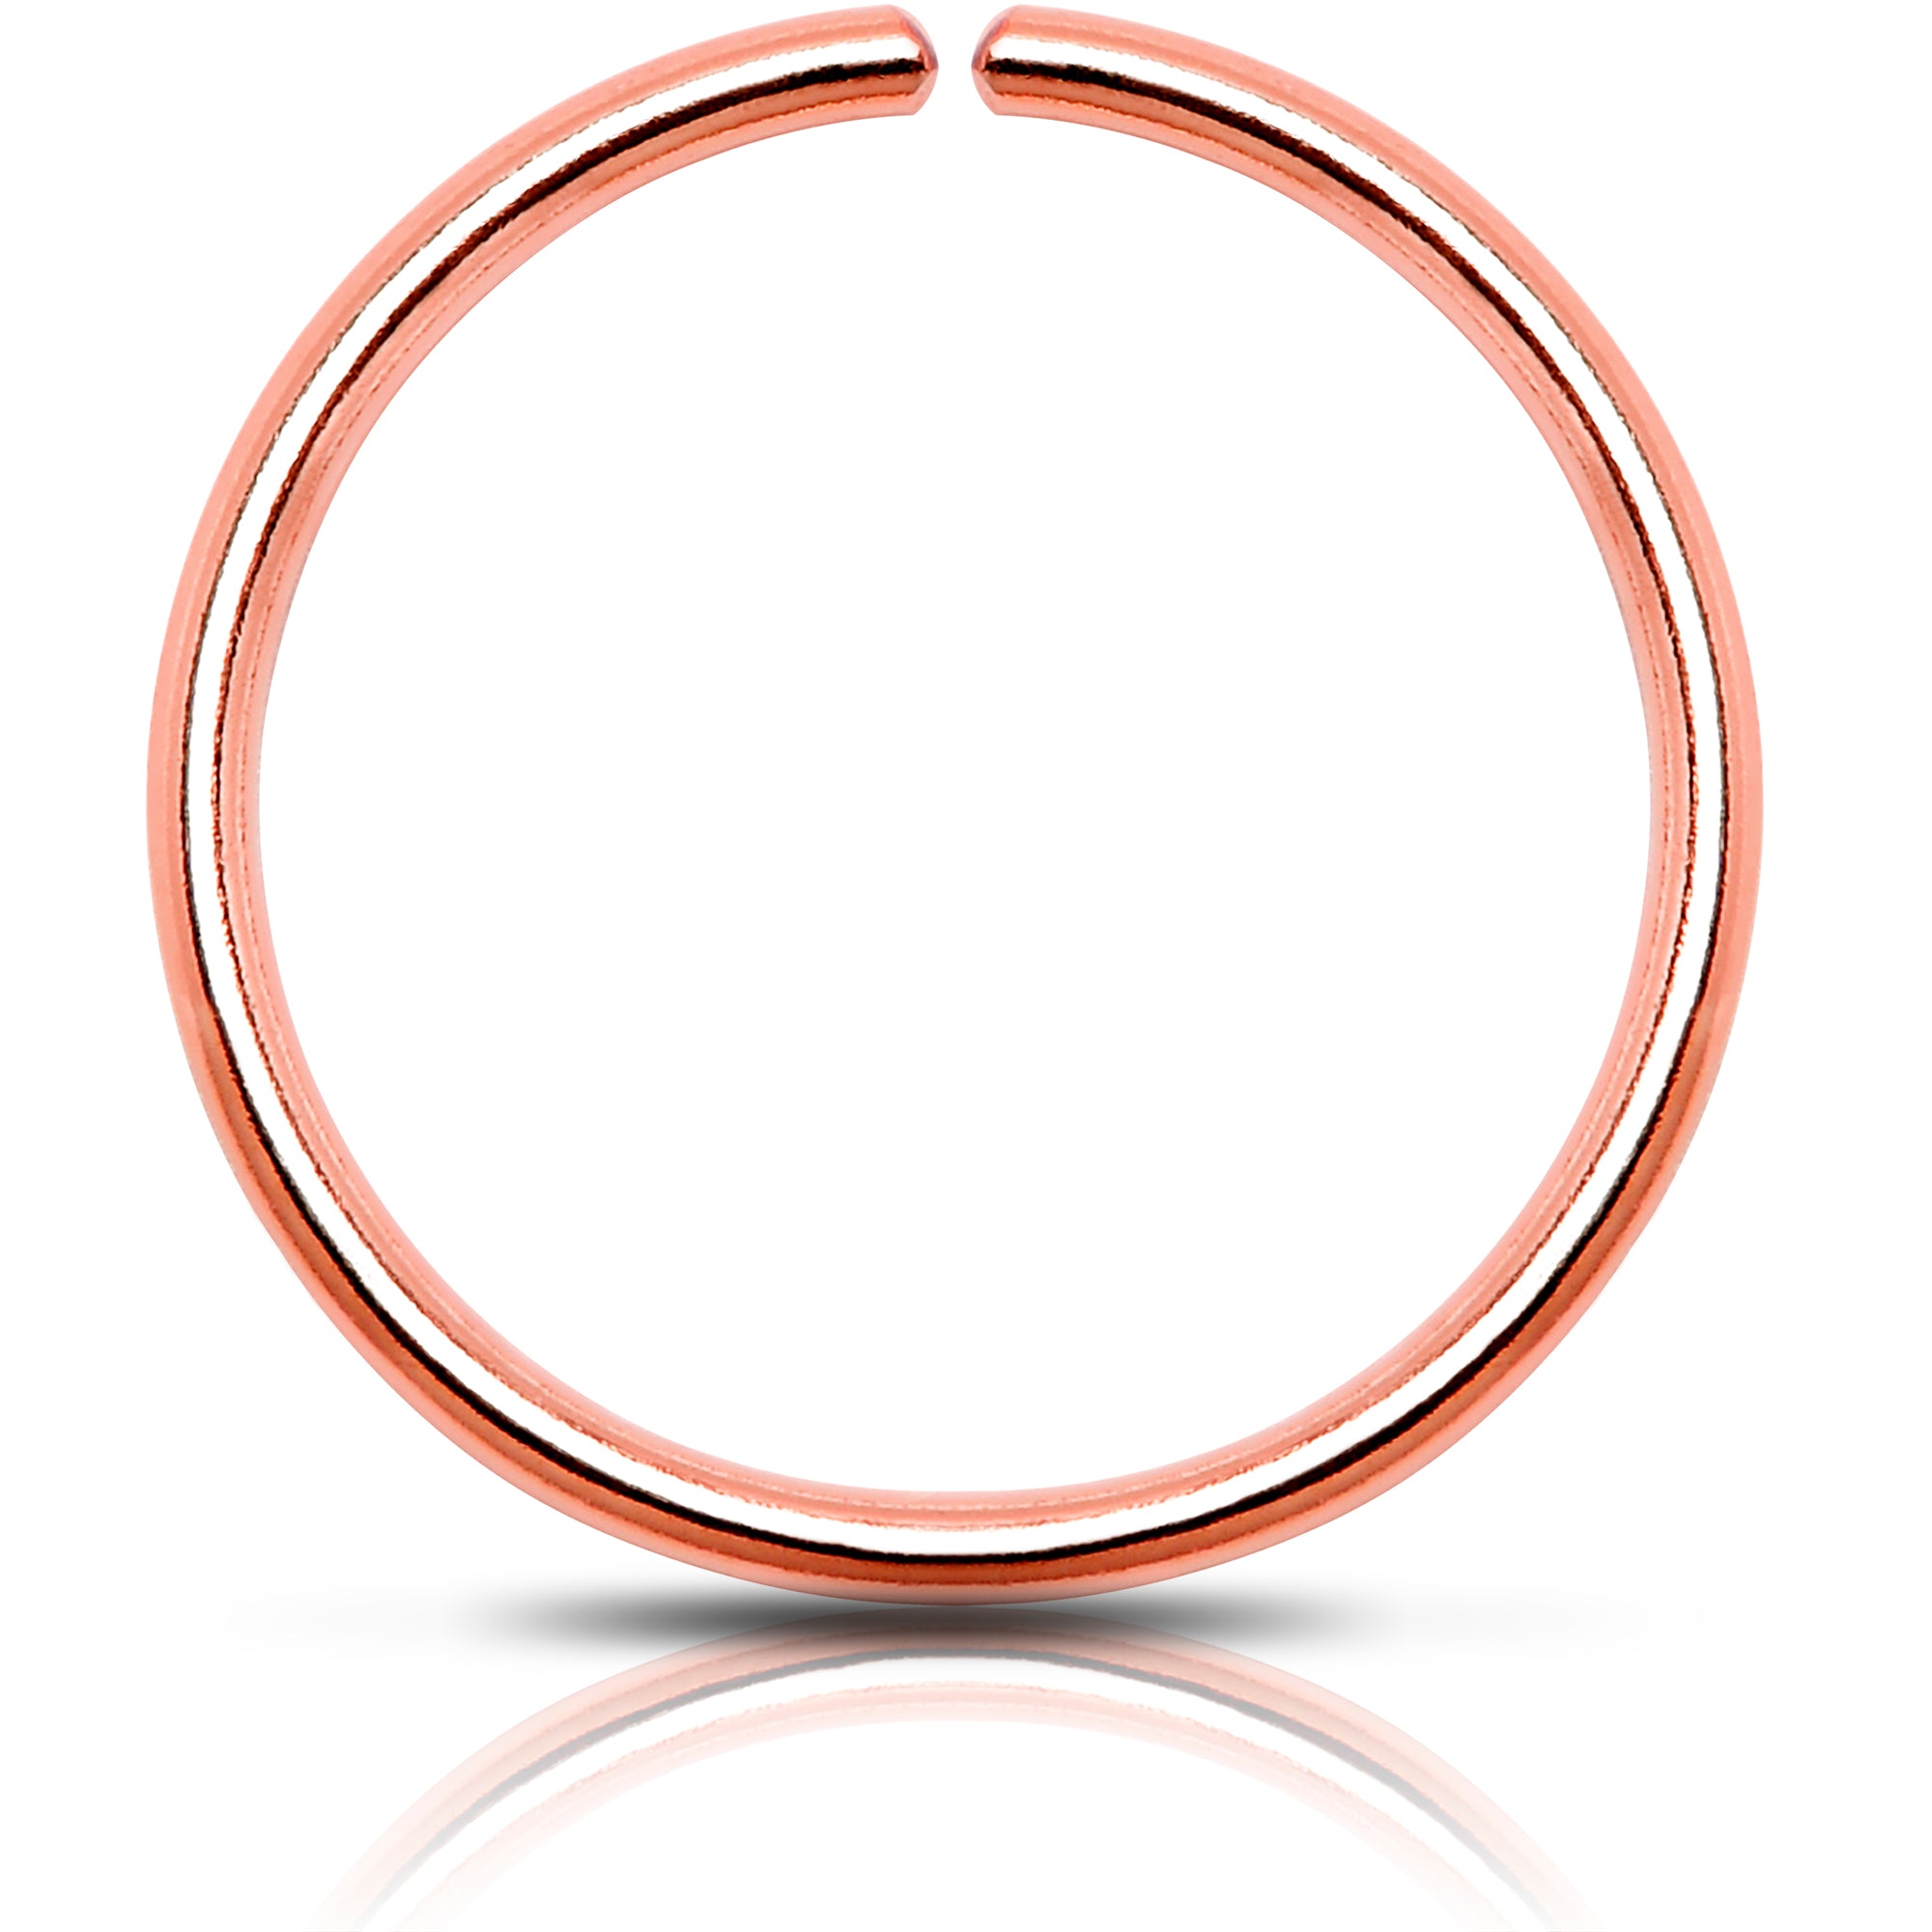 Single Hoop Nose 14k Rose Gold Filled Nose Hoop Ring (Select Your Size)